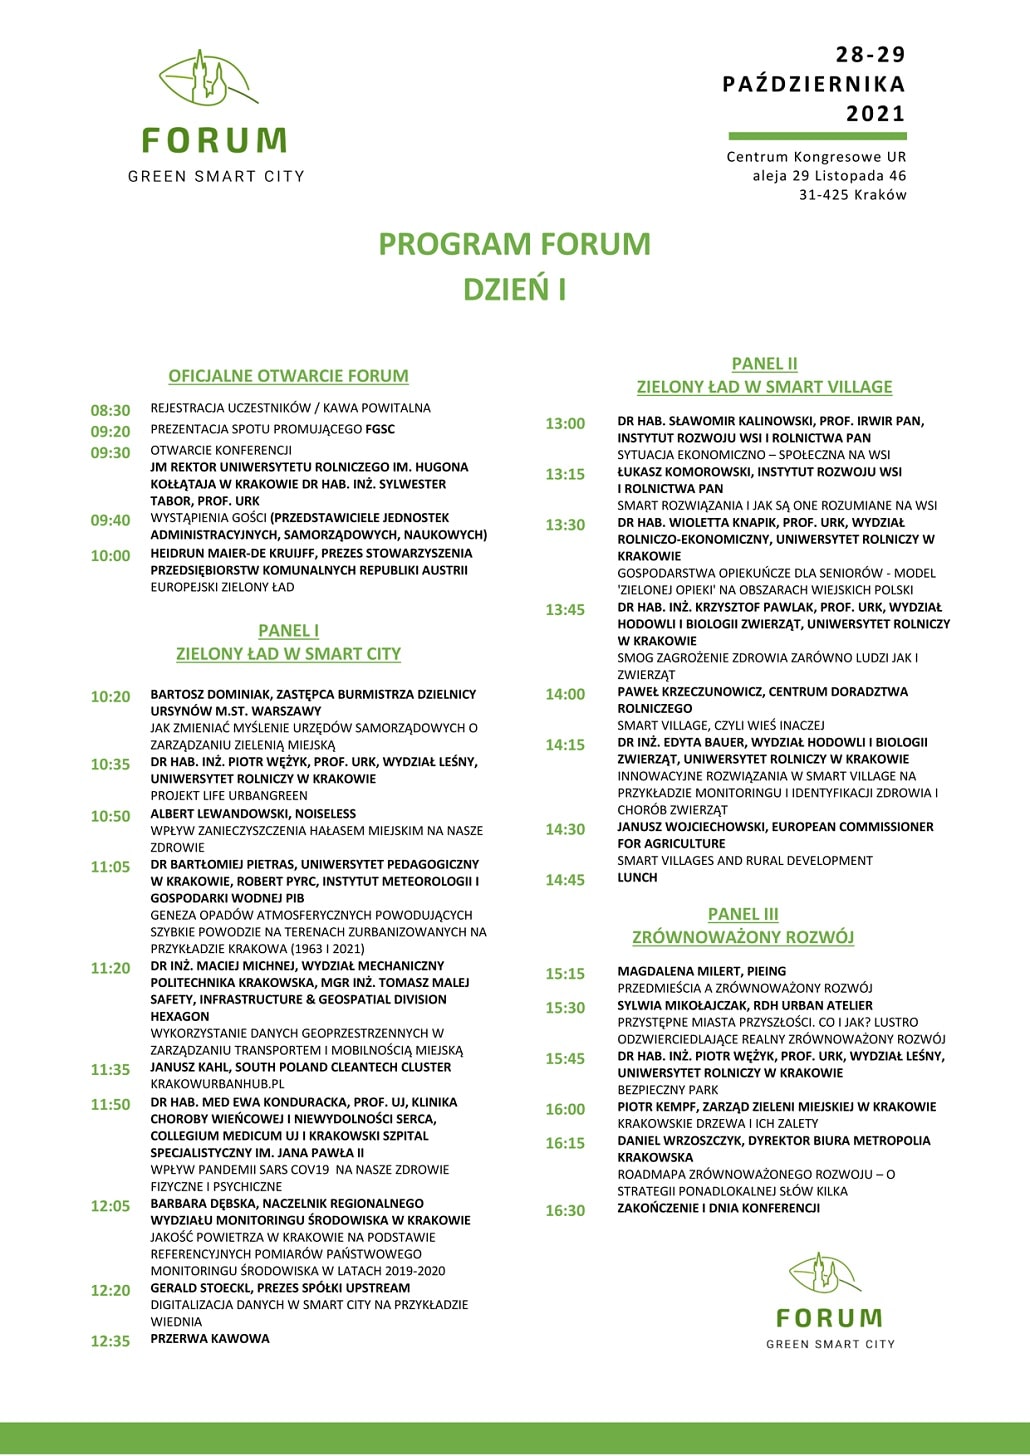 VI Forum Green Smart City 2021 program